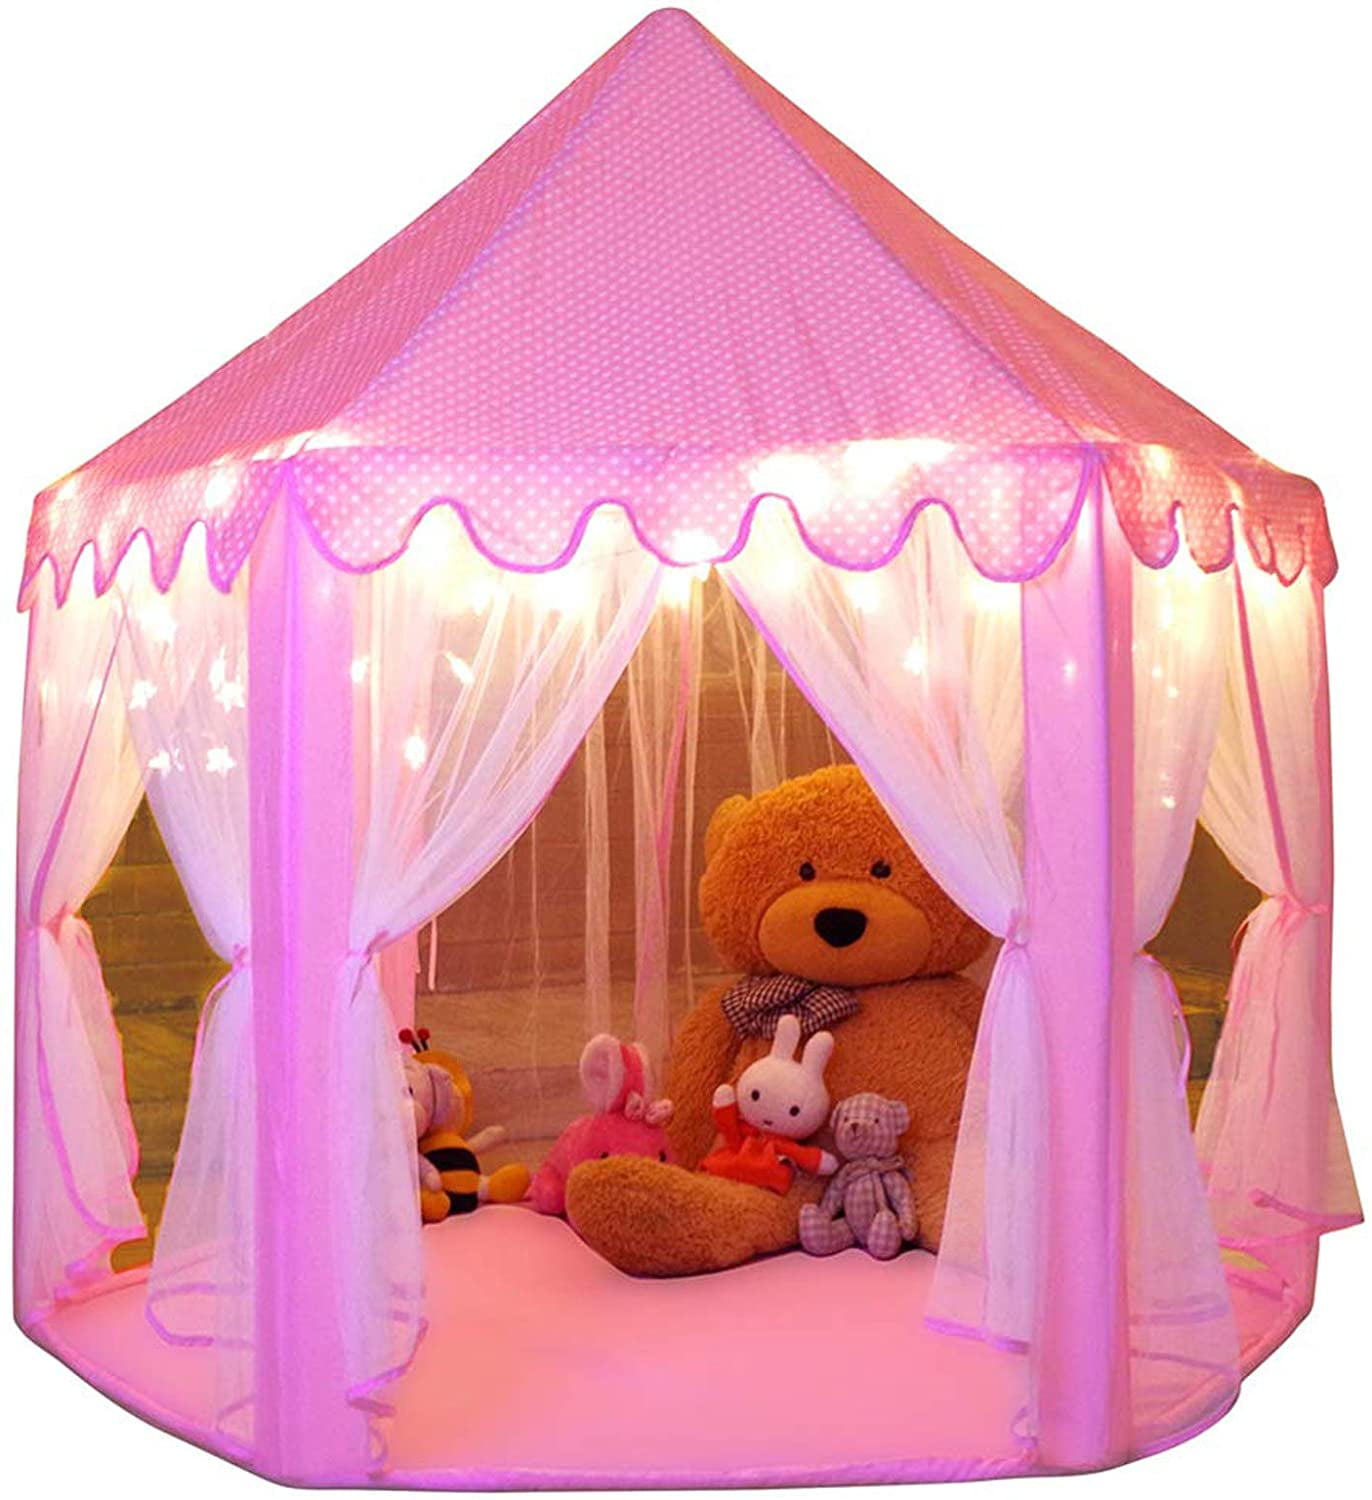 55'' x 53'' Princess Tent with Large Star Lights Girls Large Playhouse Kids Pink 